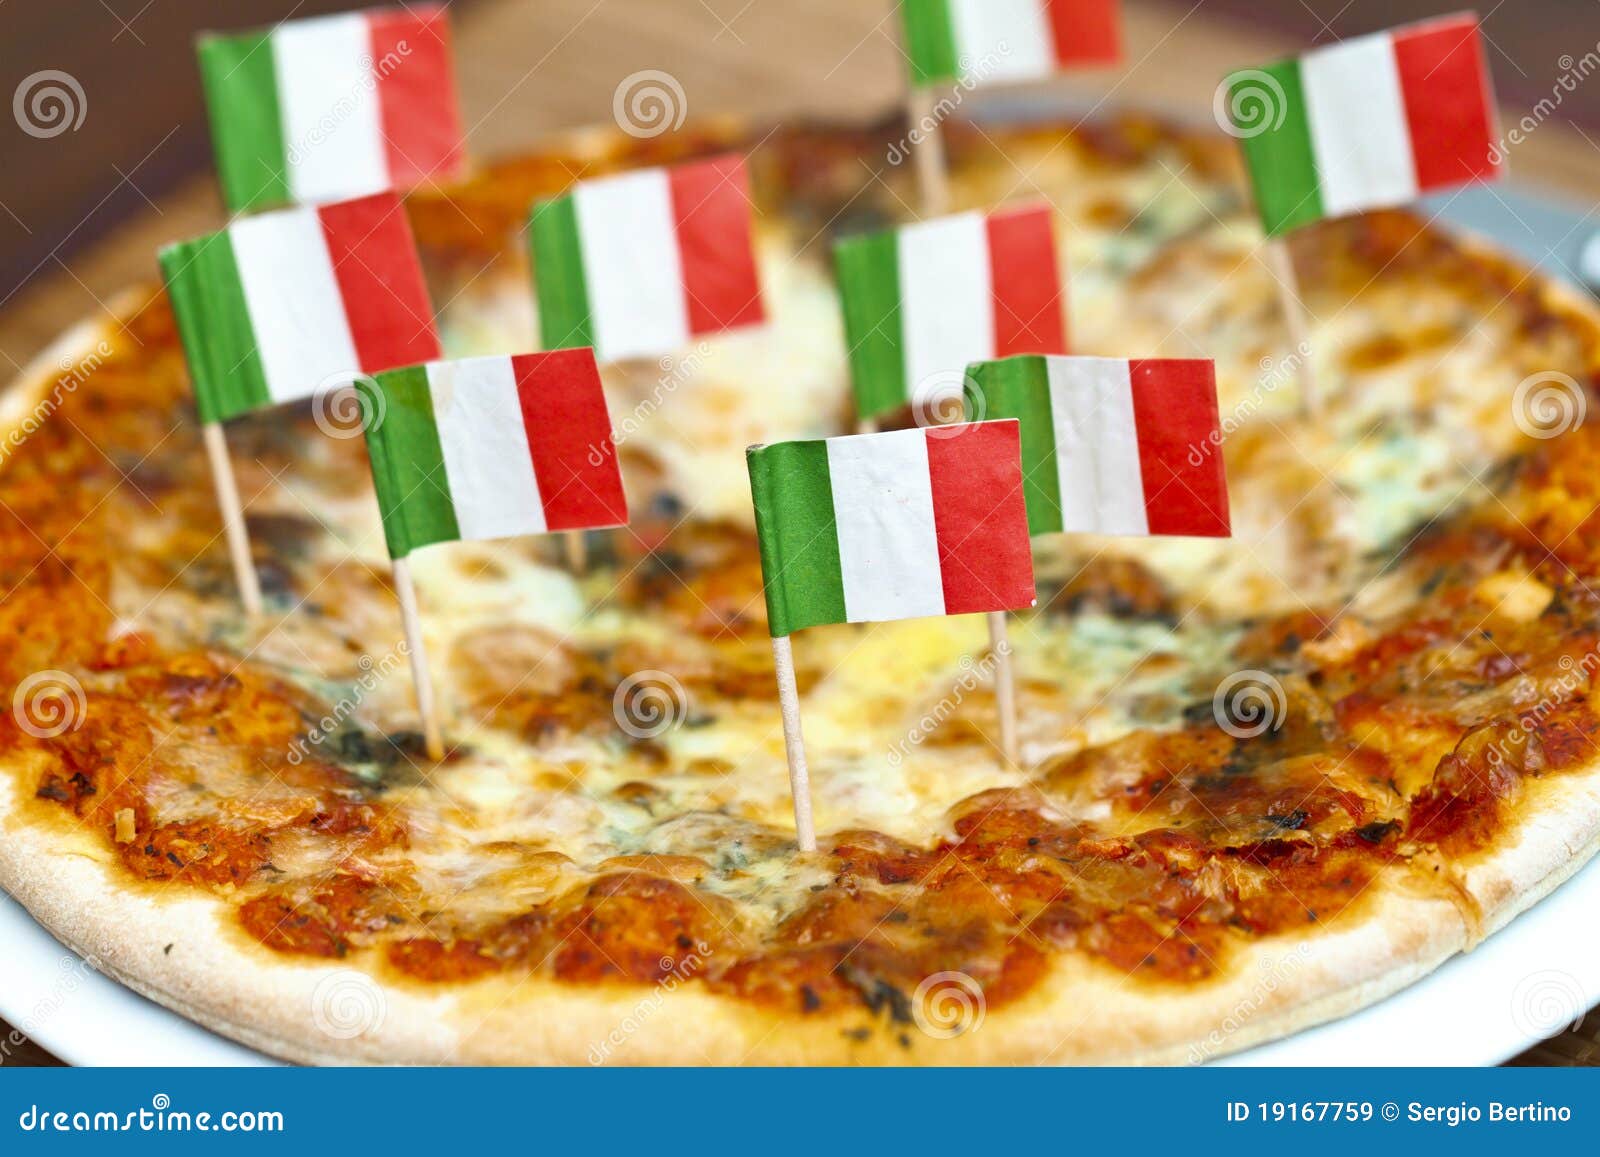 Italiaanse Pizza stock Image of versierd - 19167759